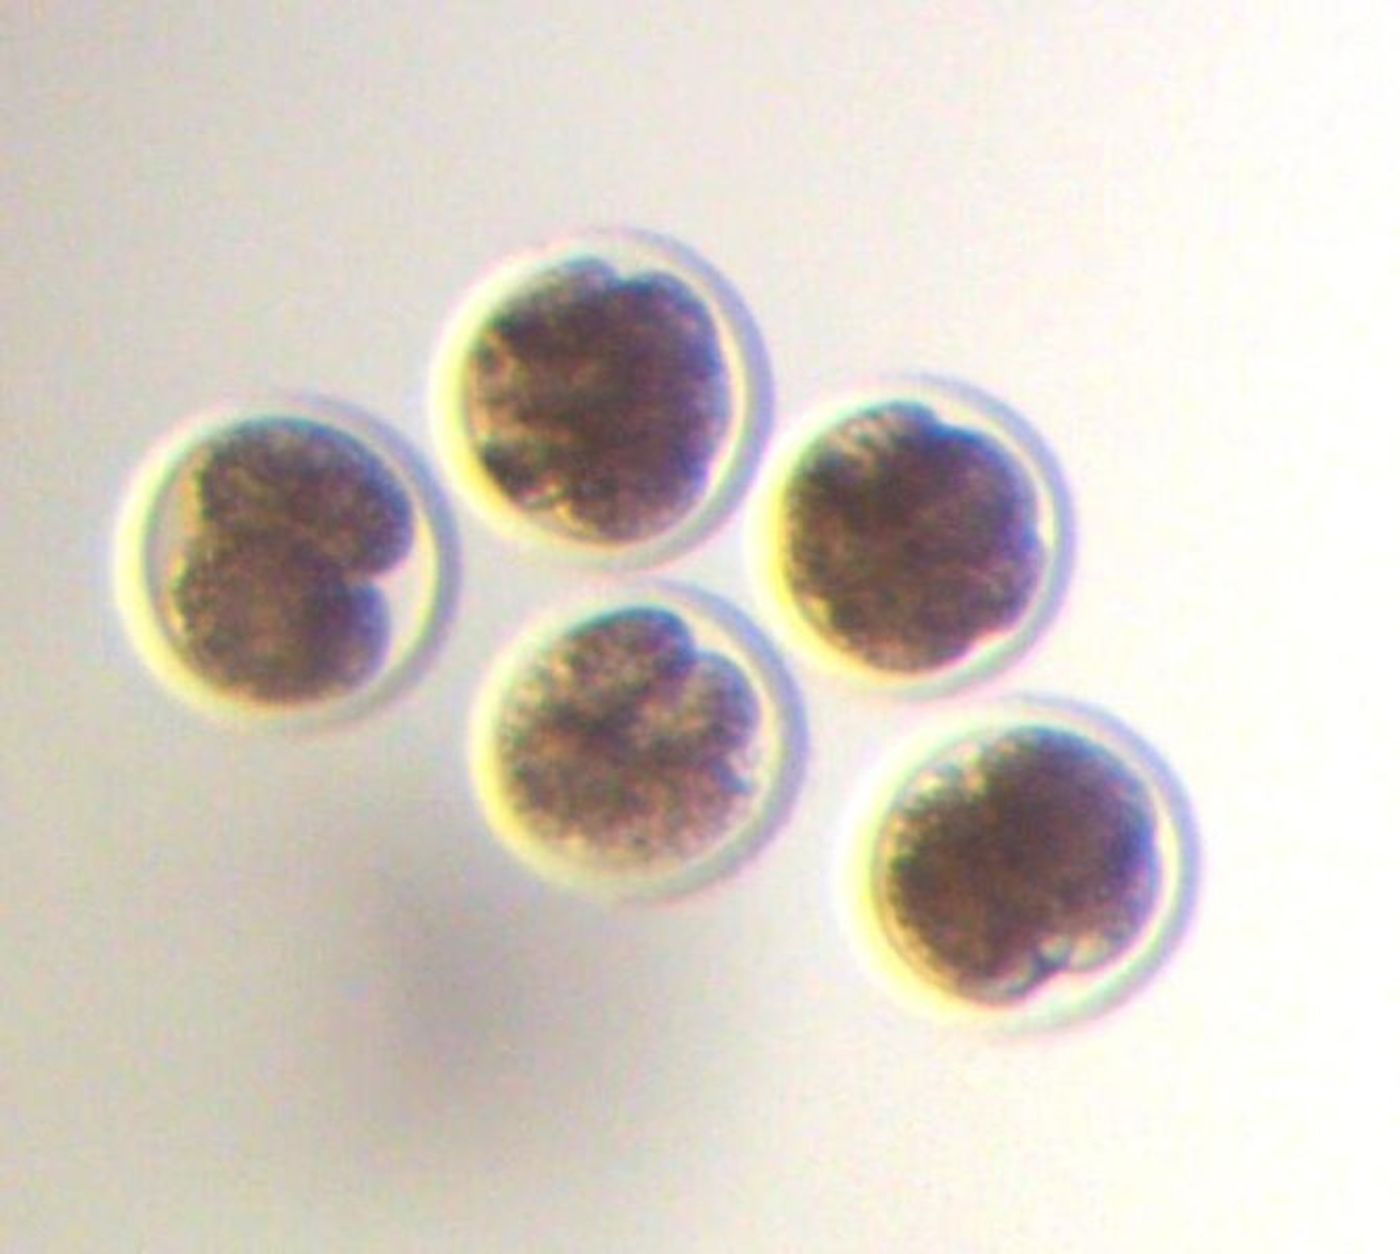 Bovine embryos were examined for abnormal chromosome segregation during development.